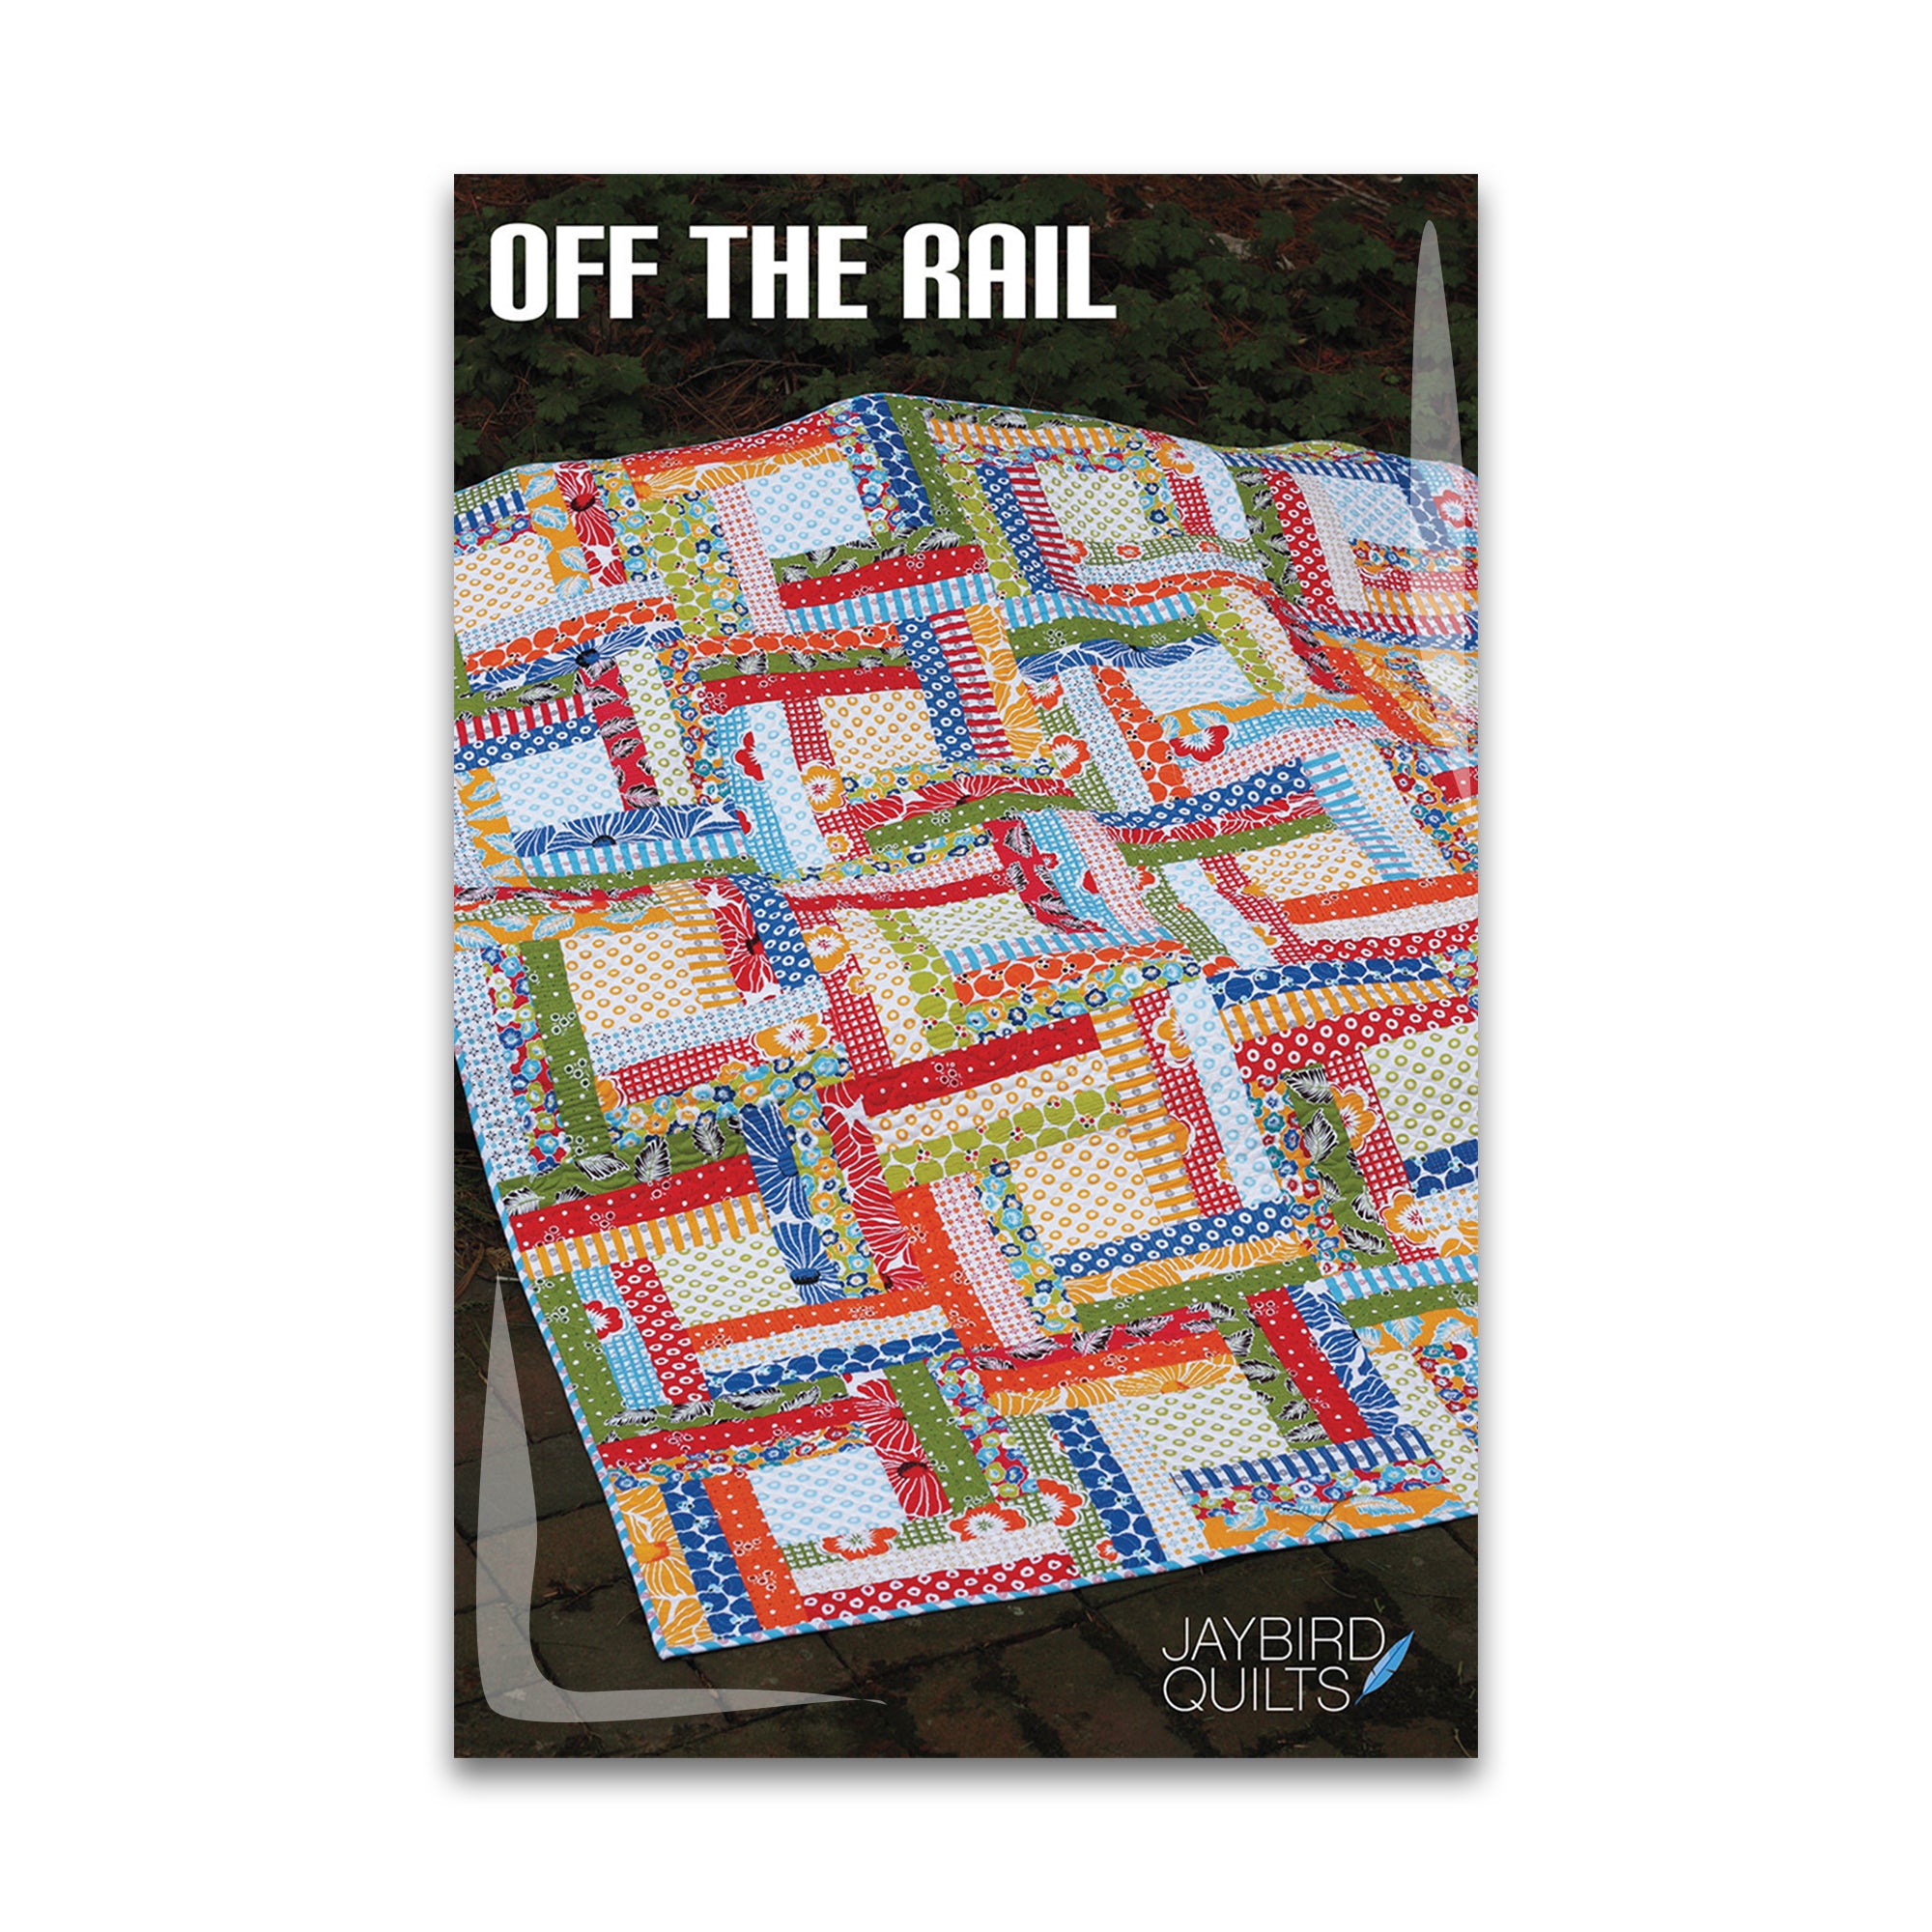 6 Foot Ruler quilt pattern: PDF download – WholeCircleStudio